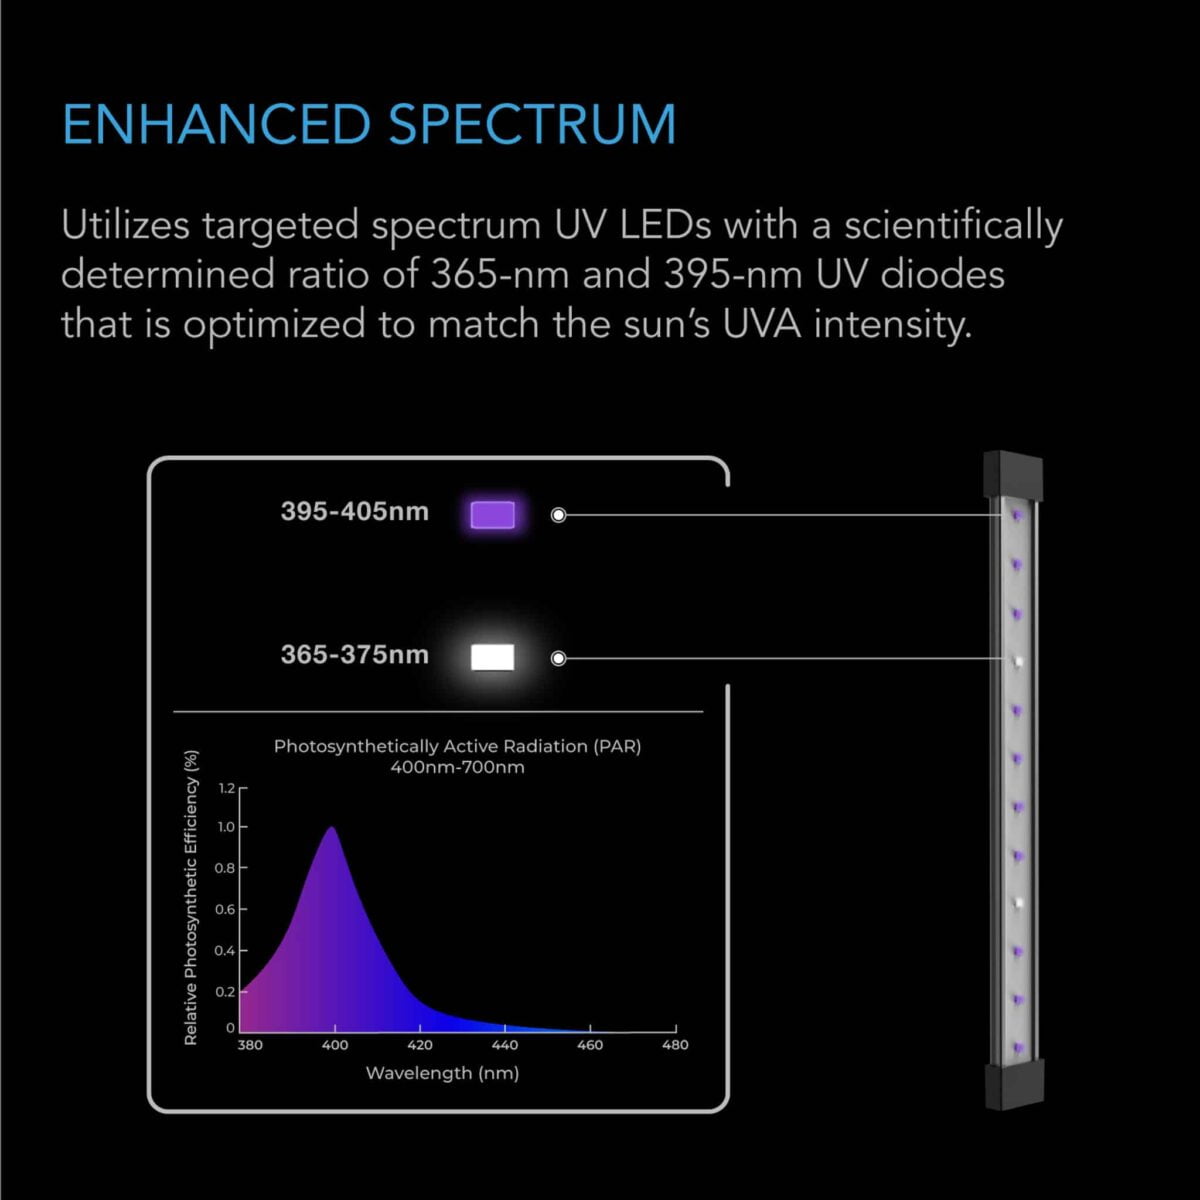 Dyrkeland AC Infinity Ionbeam U4, UV Spesifisert 28 cm LED-Bars Vekstlys